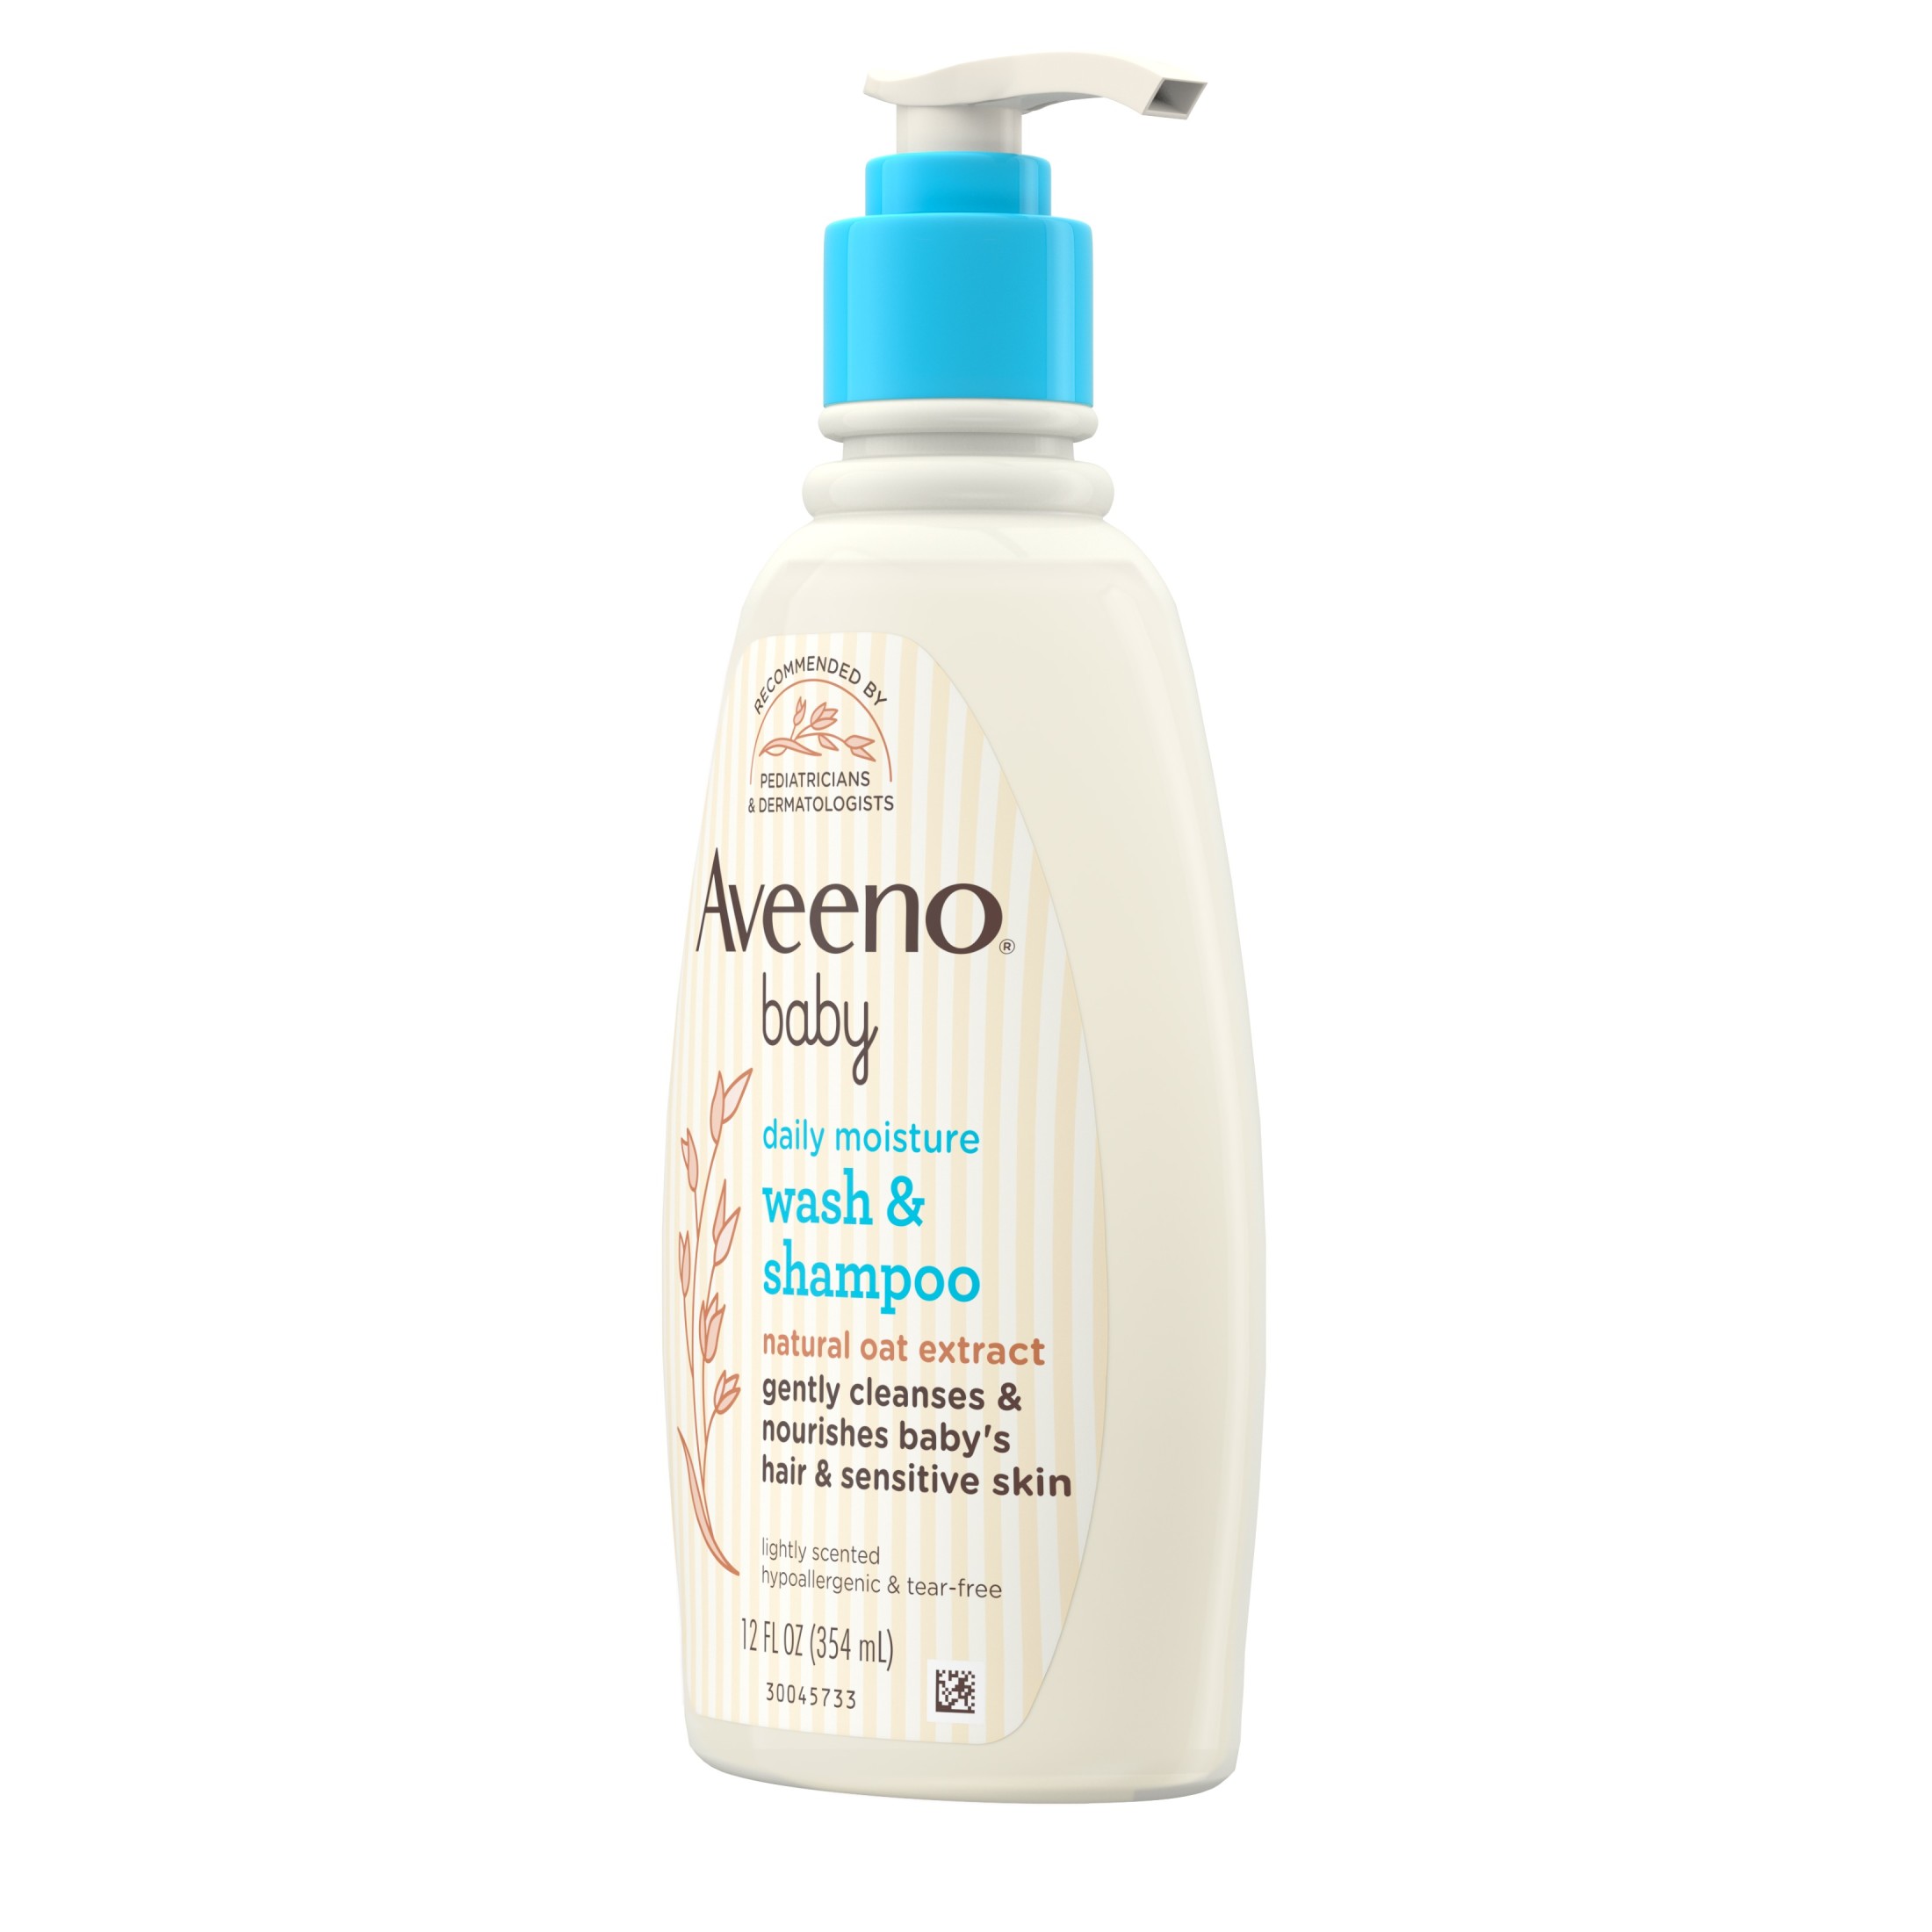 Aveeno Baby Daily Moisture Body Wash & Shampoo, Oat Extract, 12 fl. oz - image 10 of 14